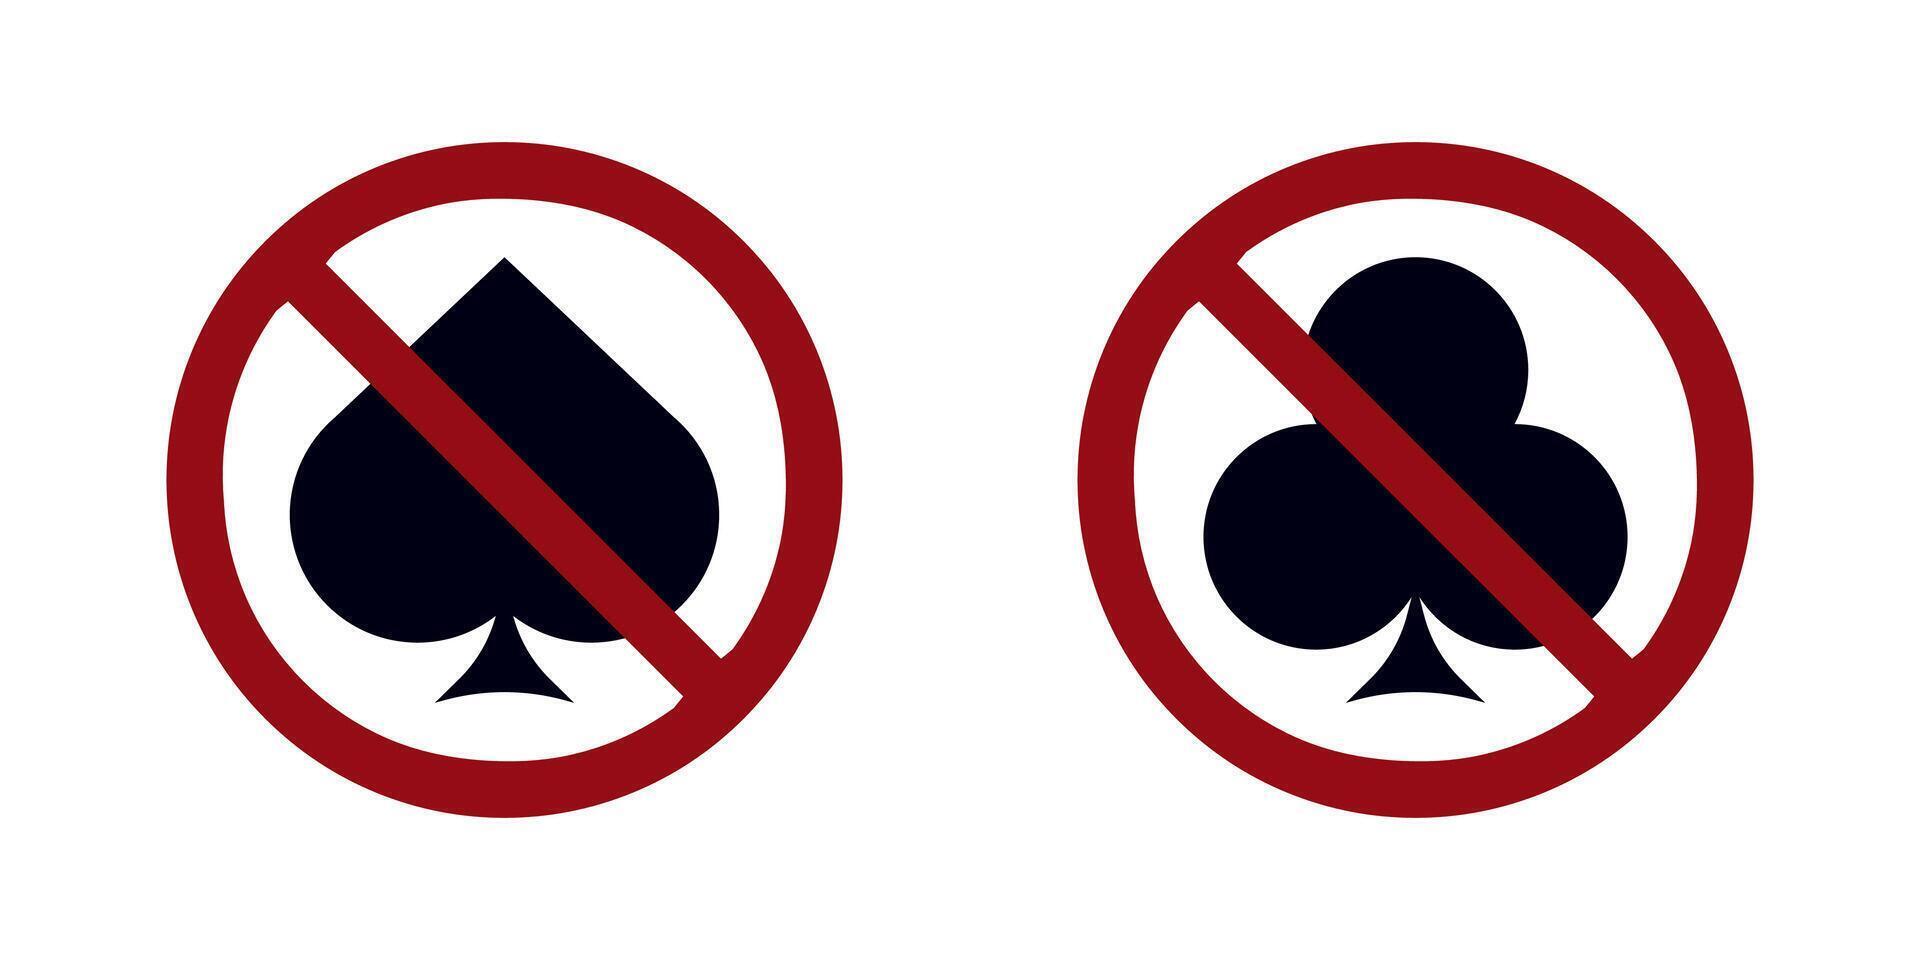 Gambling casino ban prohibit icon. Not allowed illegal poker vector